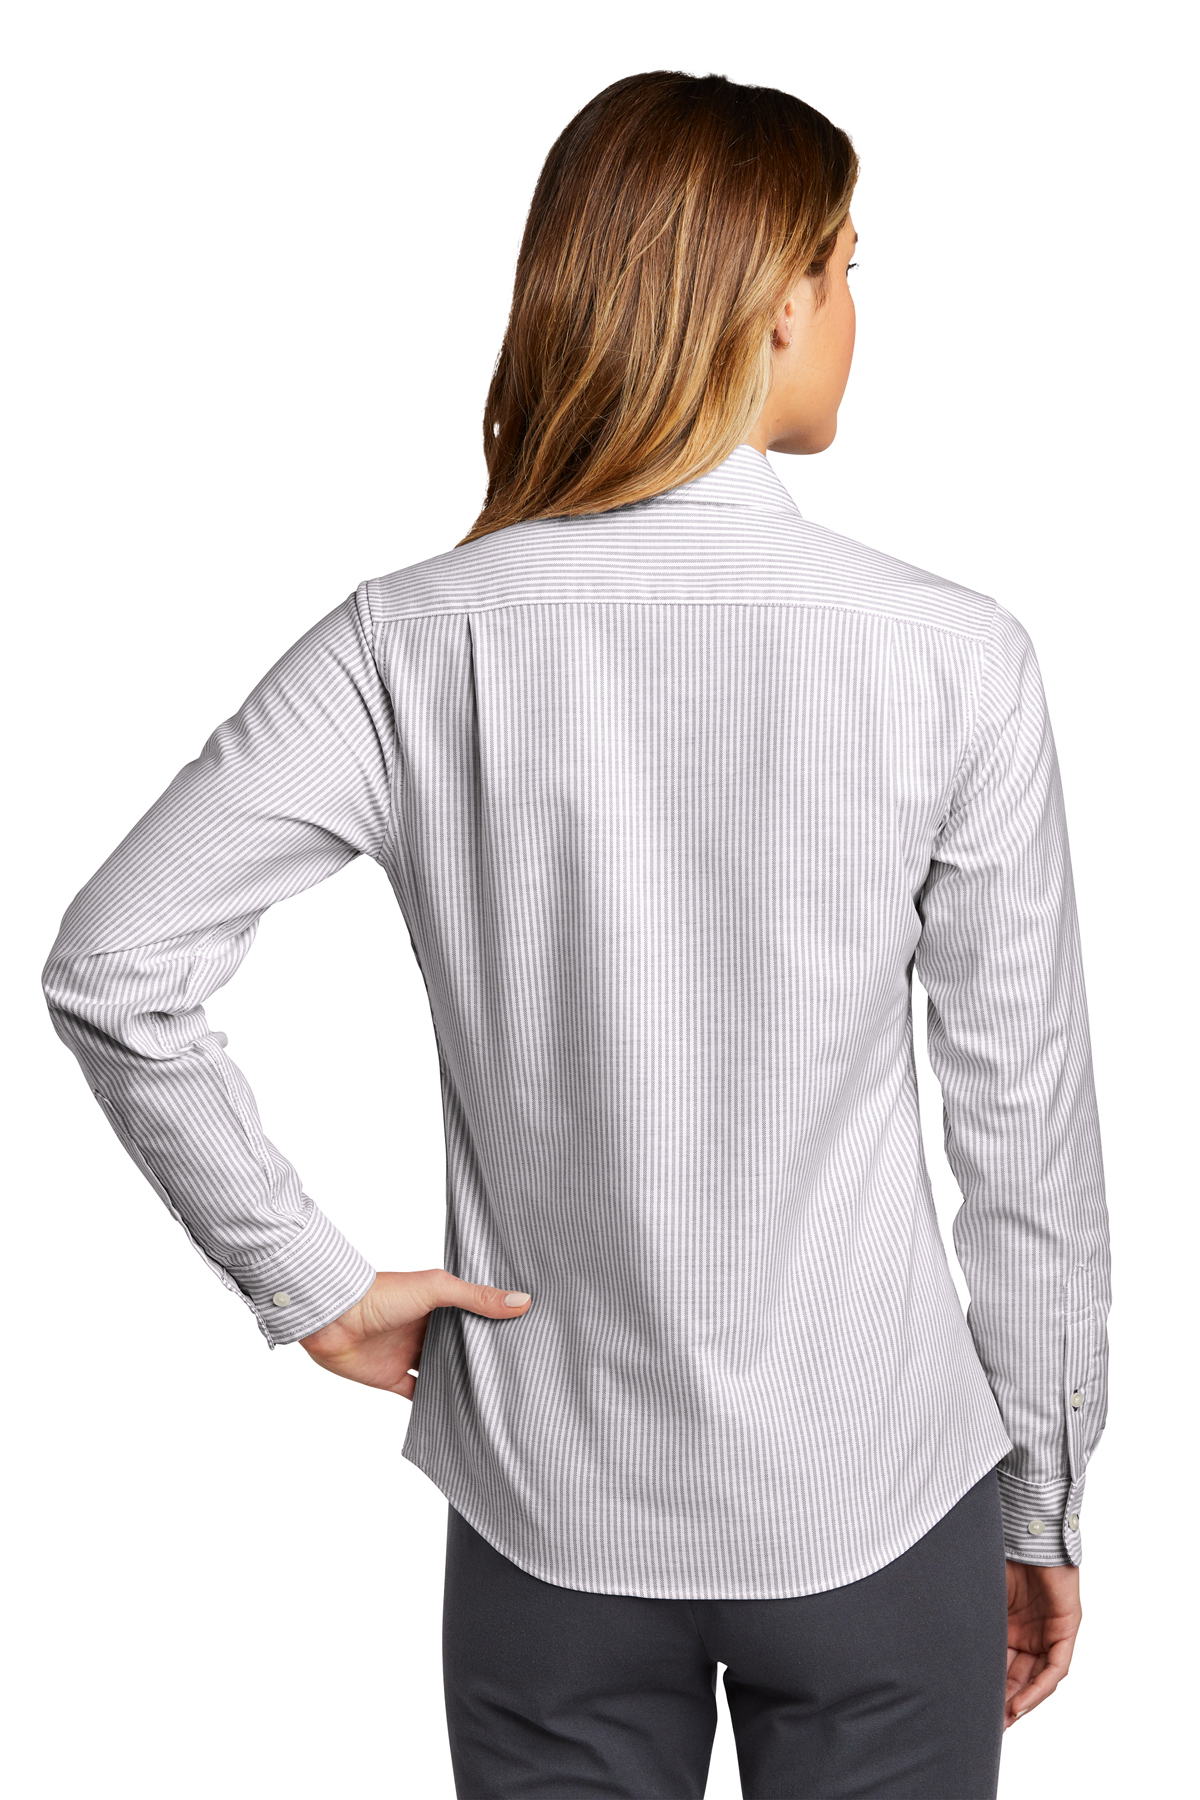 Port Authority Ladies SuperPro Oxford Stripe Shirt | Product | Port ...